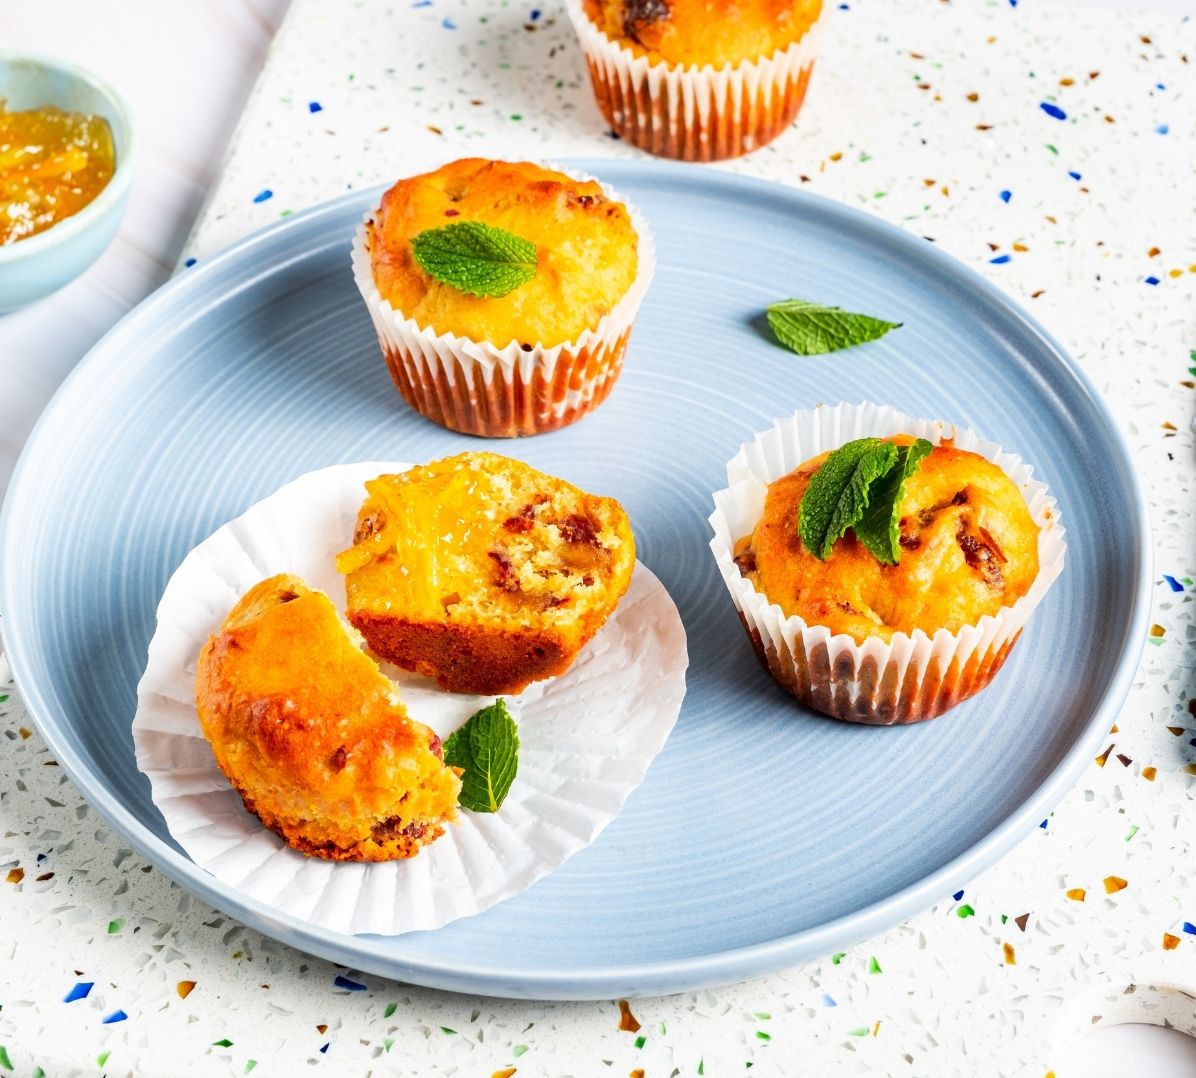 Date & Orange Muffins with Candied Orange & Marmalade